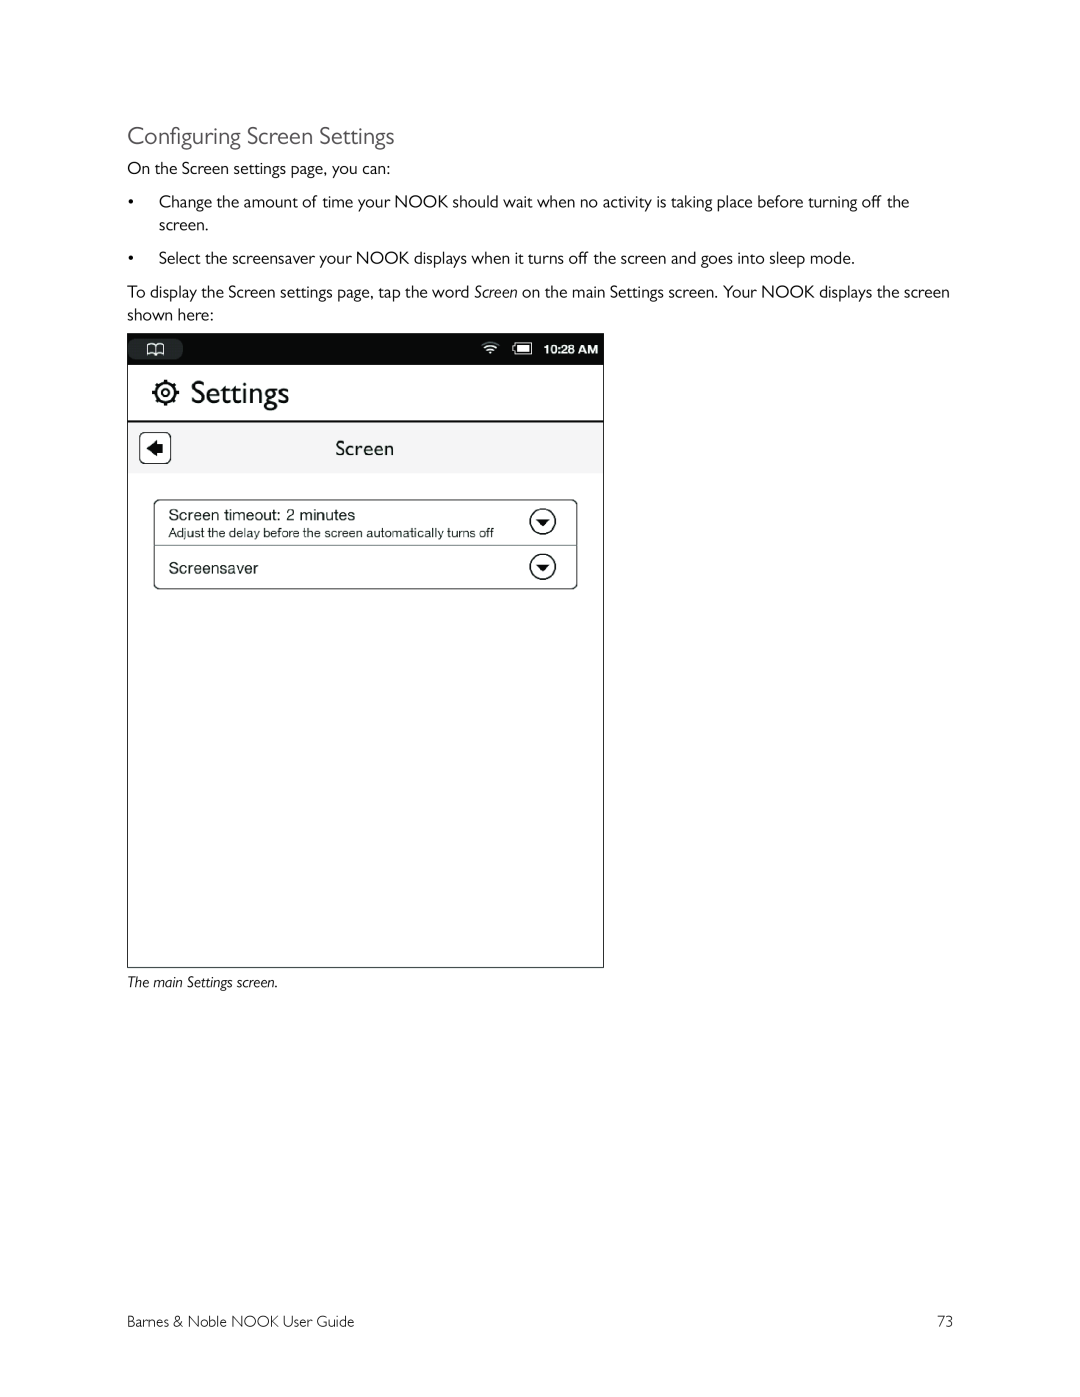 Barnes & Noble BNRV300 manual Configuring Screen Settings 